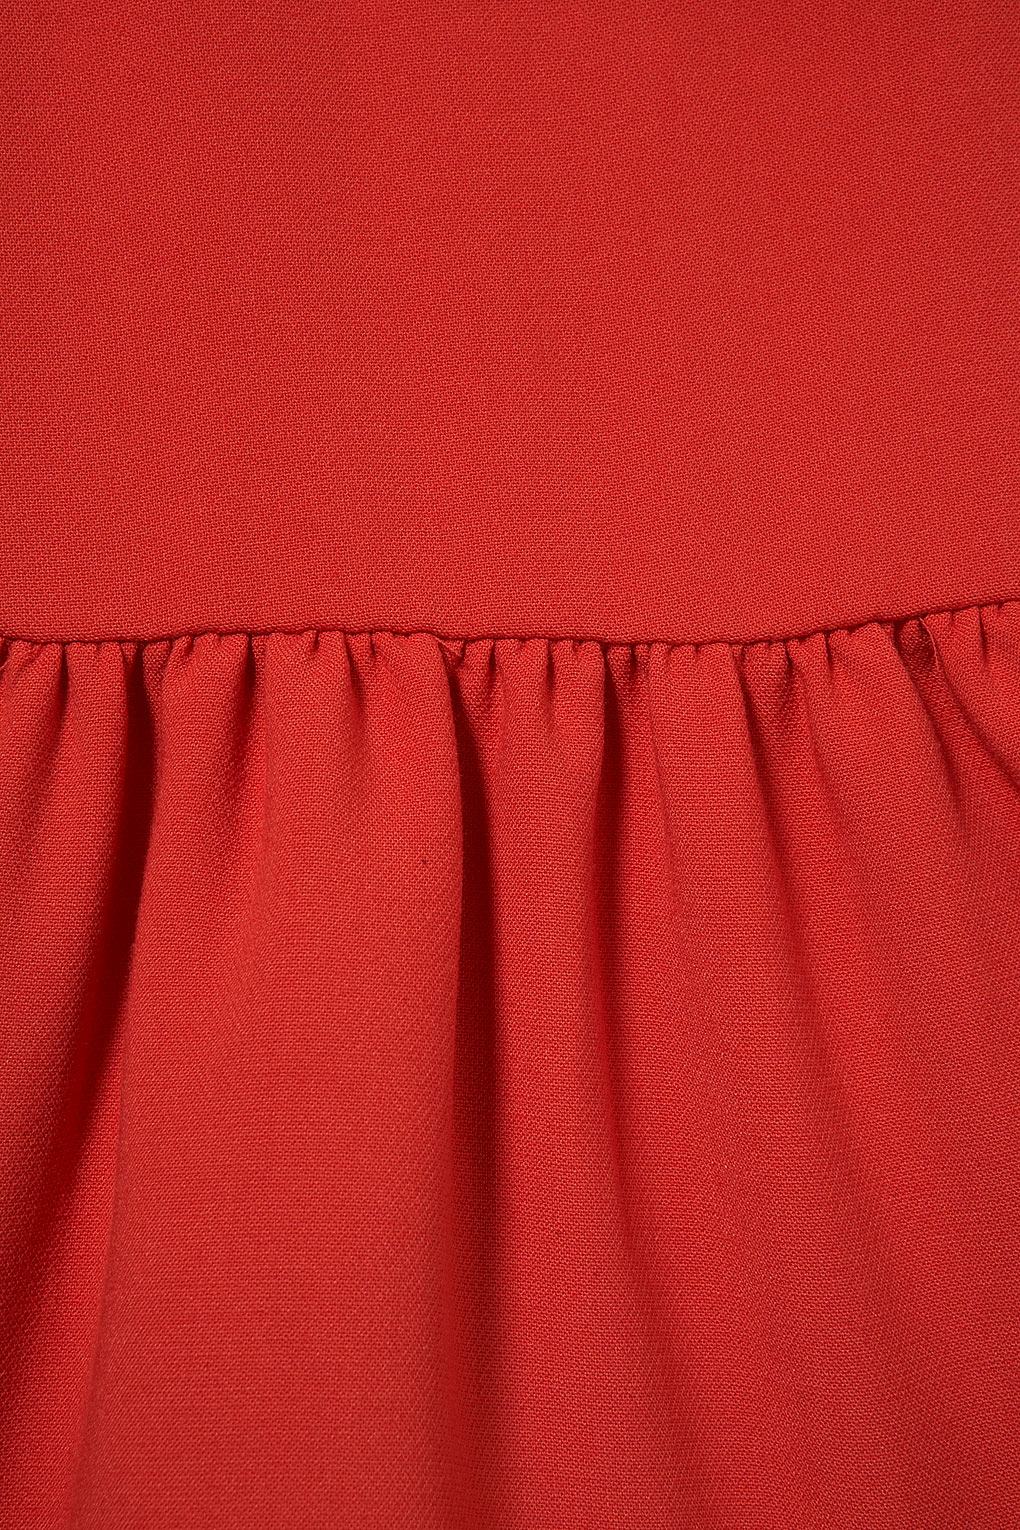 Topshop Drop Waist Shift Dress in Red | Lyst